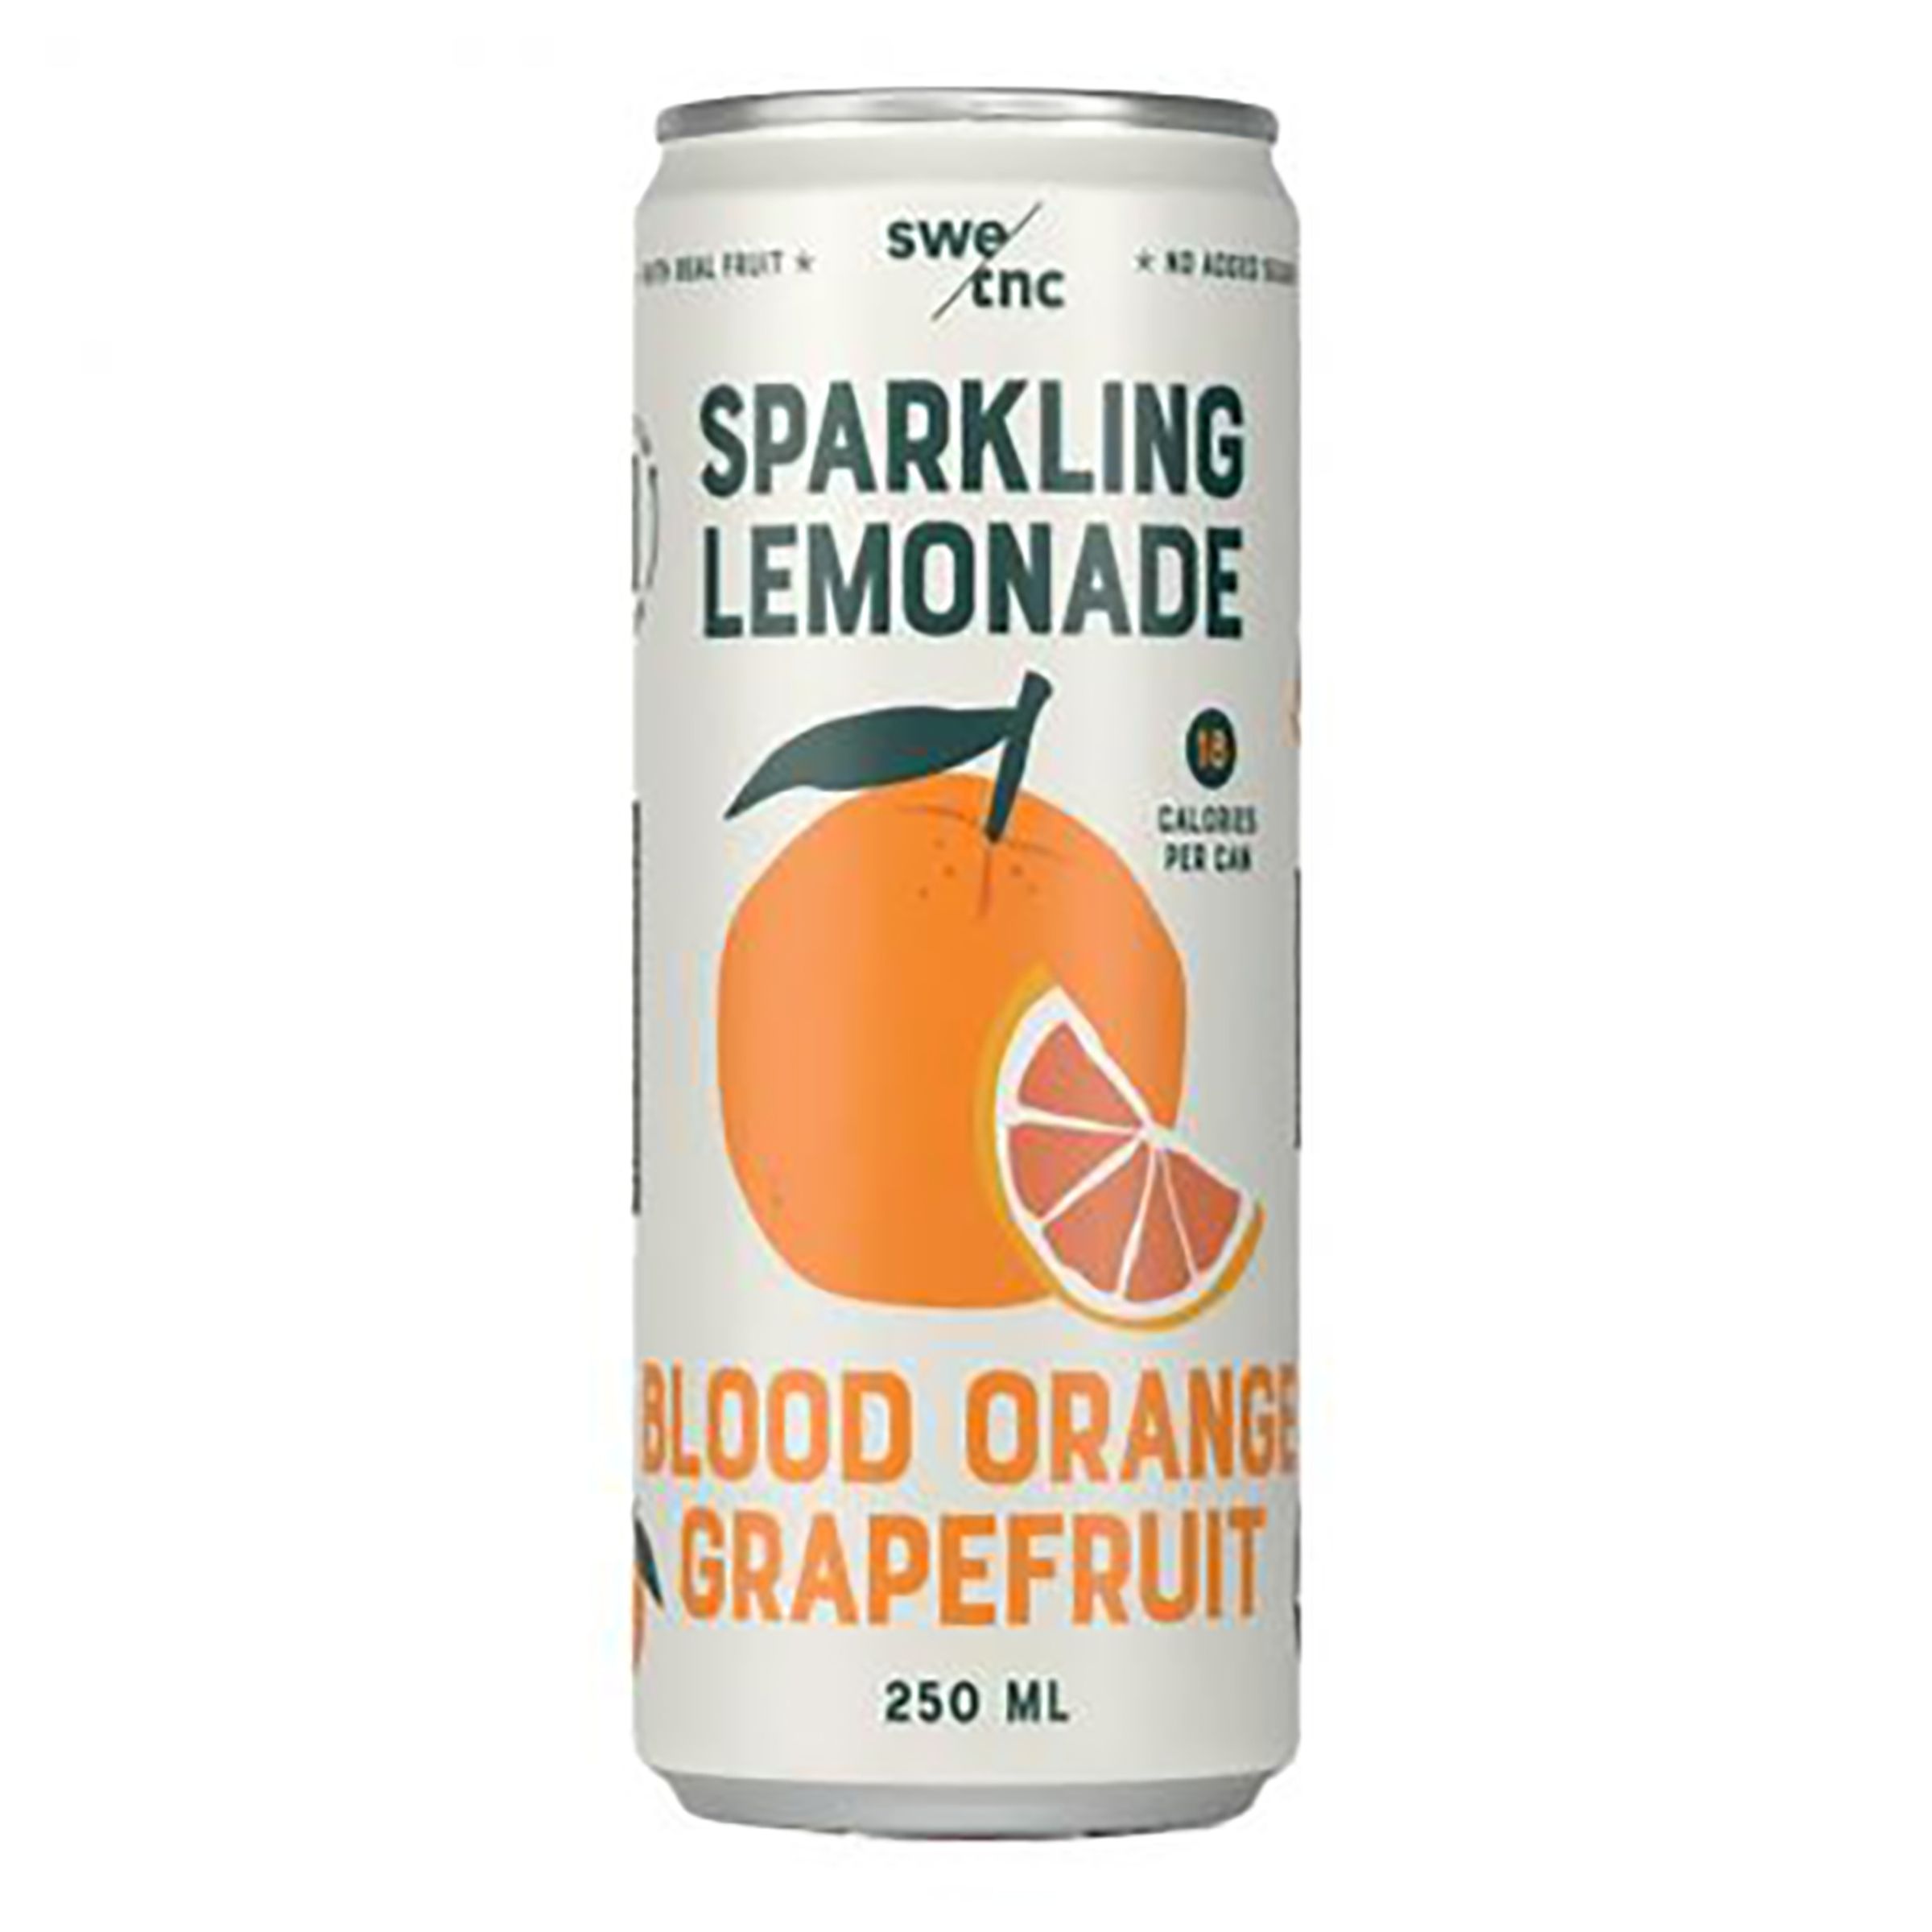 Swedish Tonic Sparkling Lemonade Blood Orange Grape - 25 cl